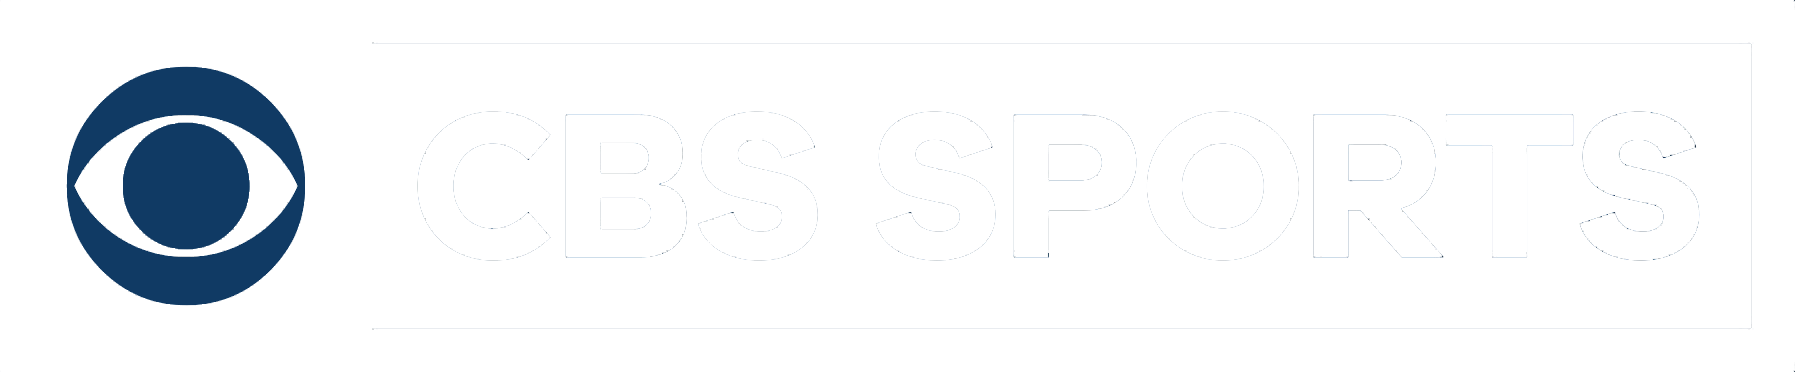 C B S Sports Network Logo PNG